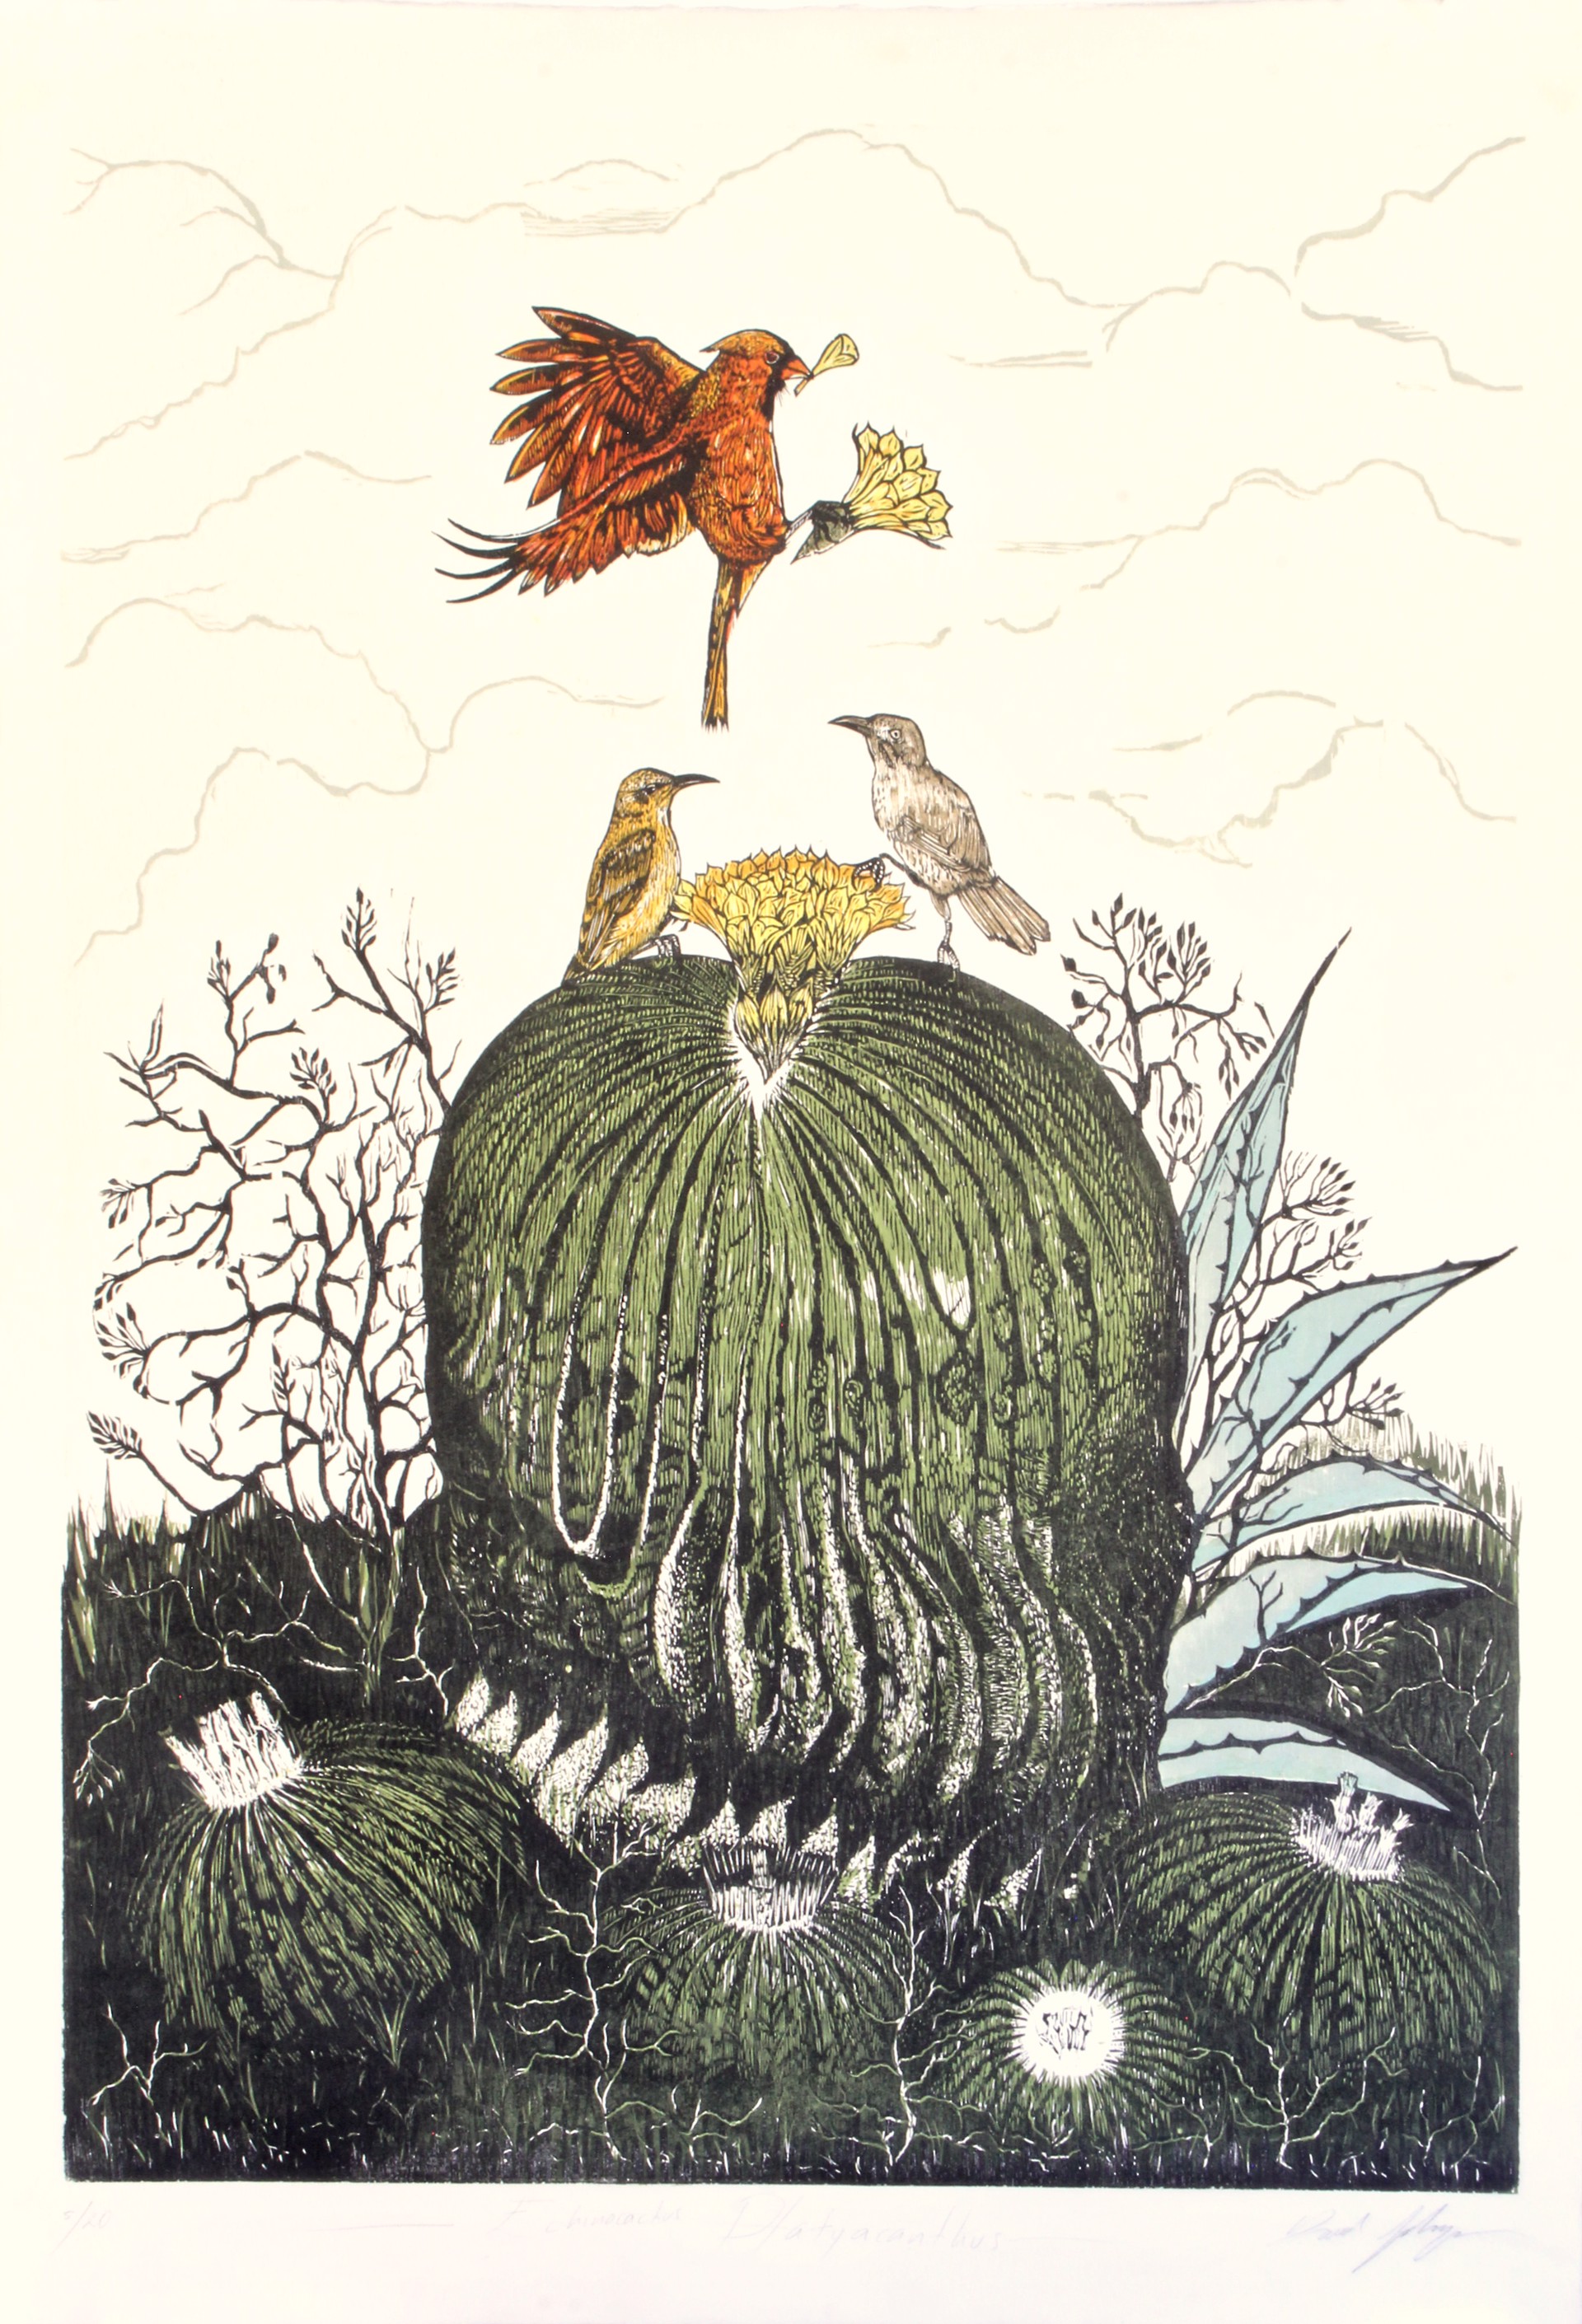 Echinocactus (Second Edition) by Daniel Salazar